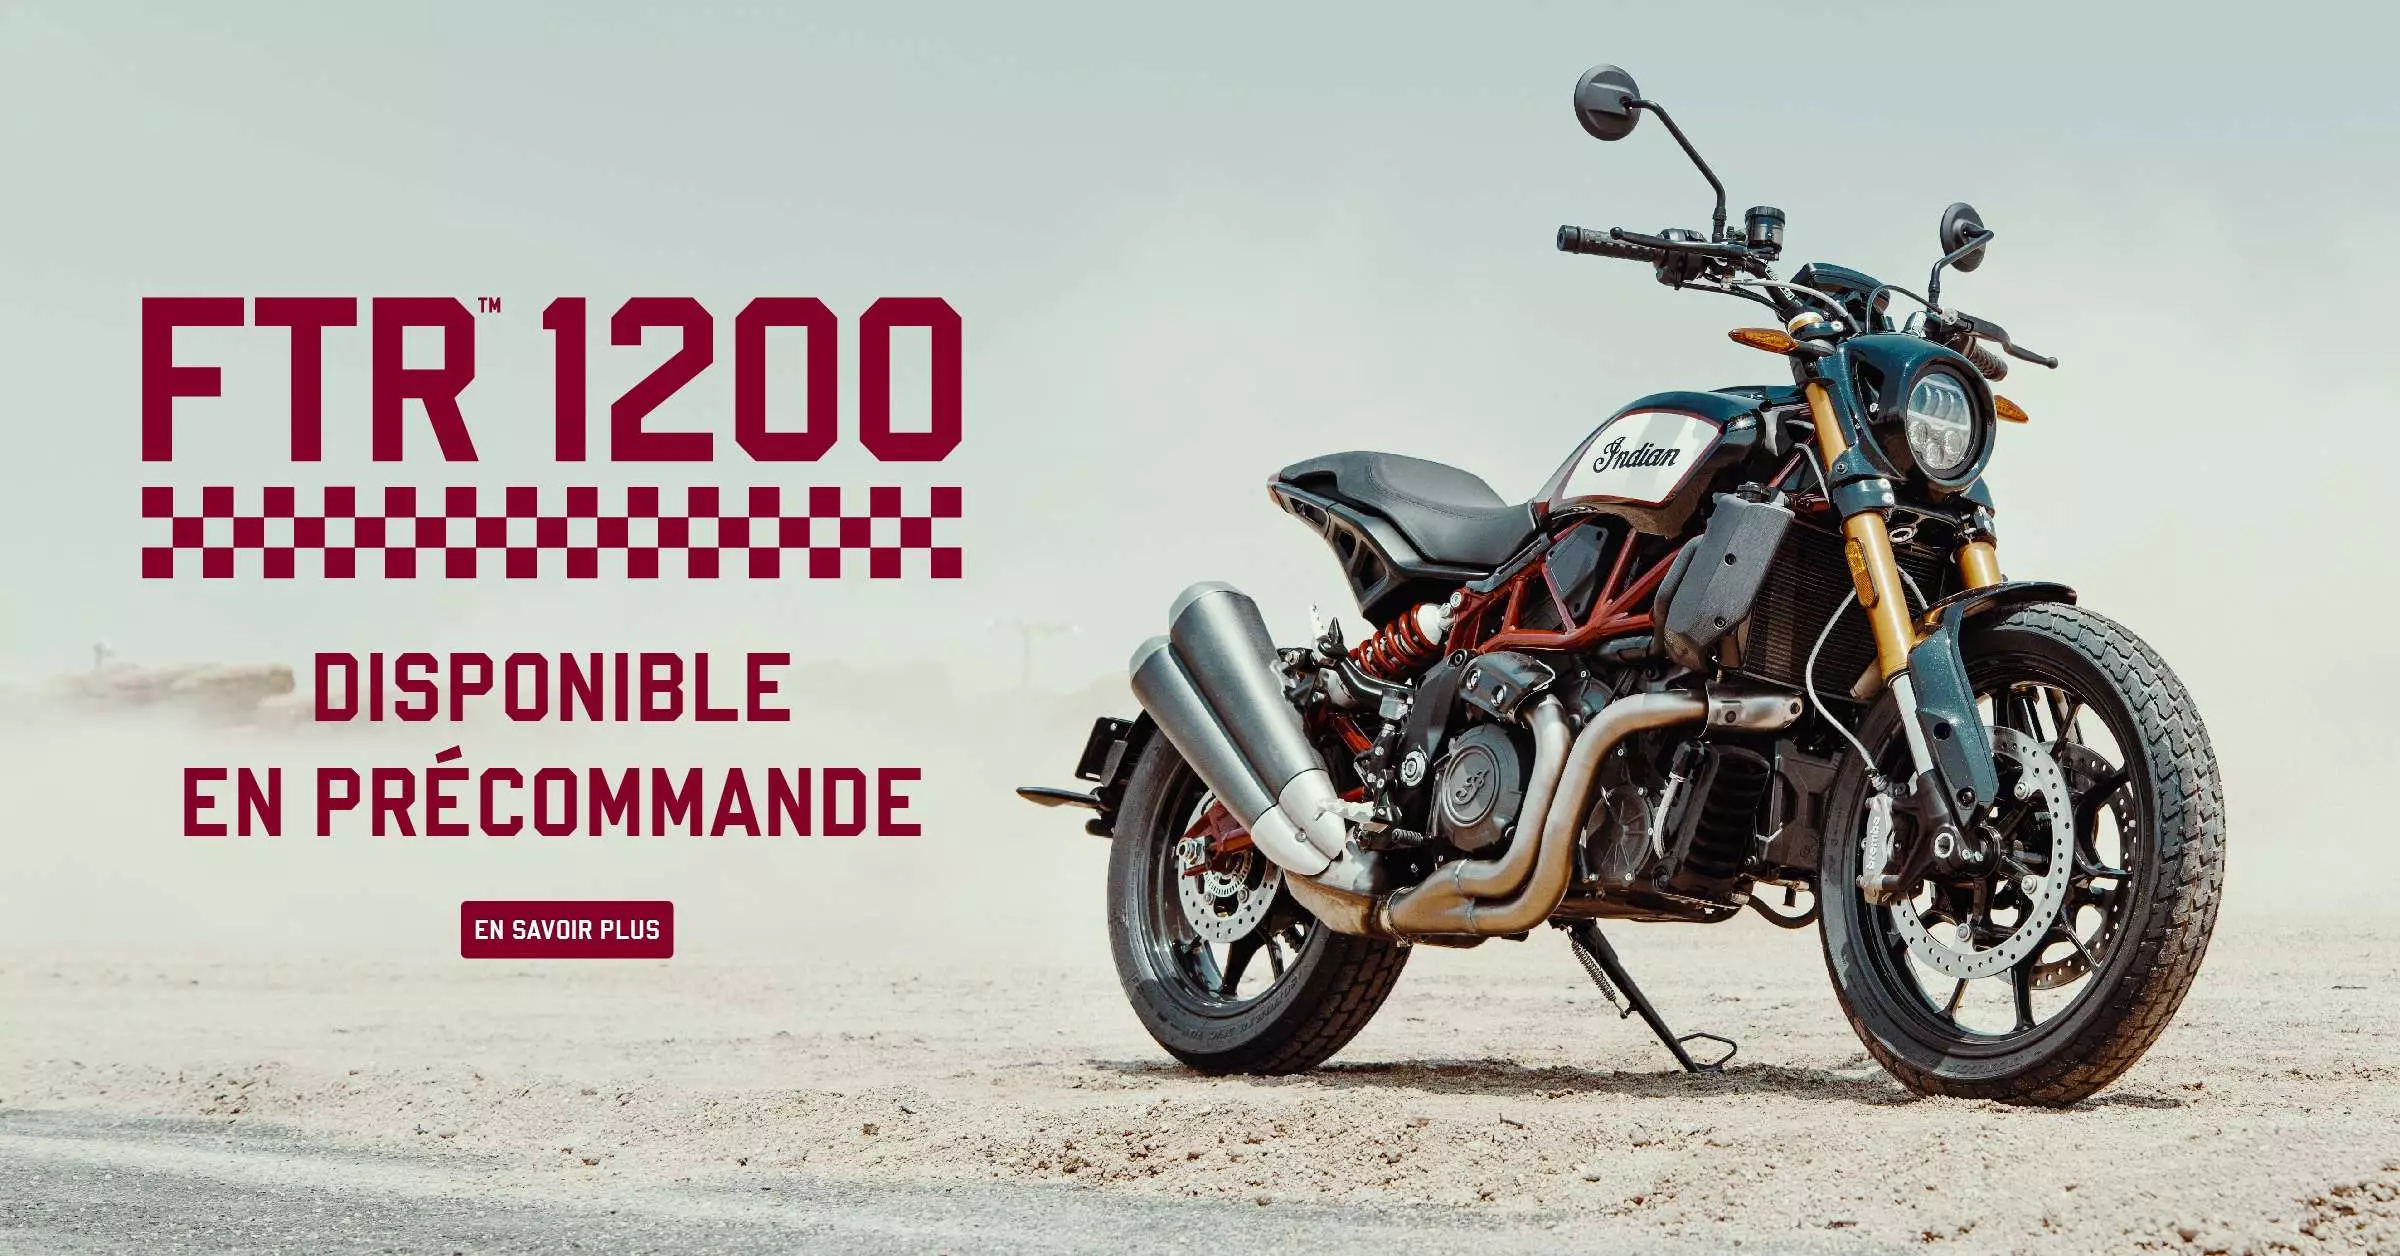 FTR 1200 d'Indian Motorcycle: une pure merveille